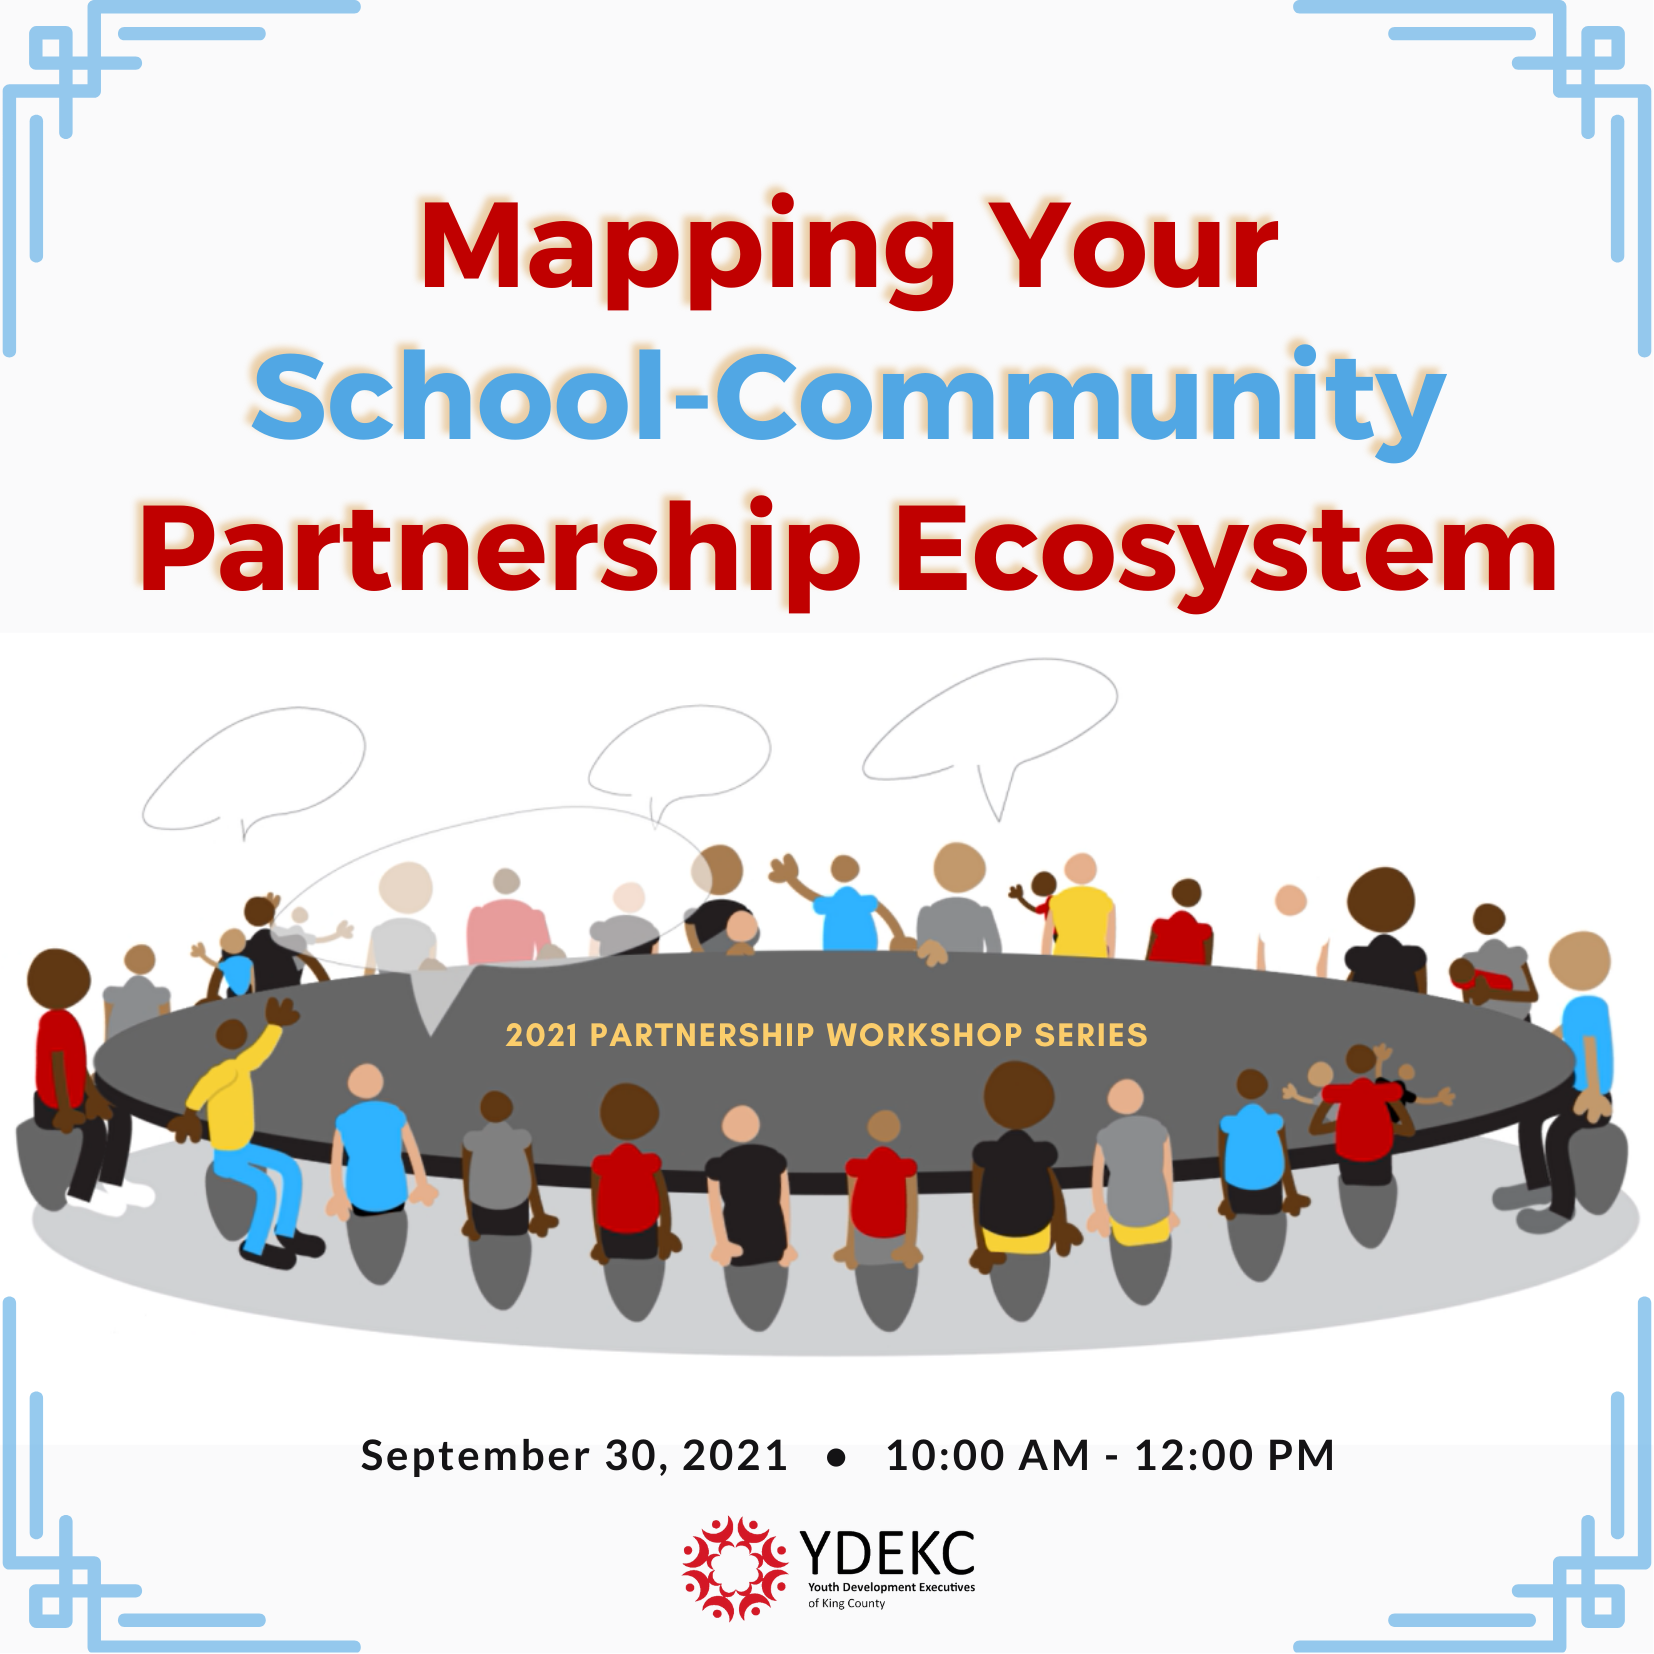 Mapping Your School-Community Partnership Ecosystem (September 30, 2021)